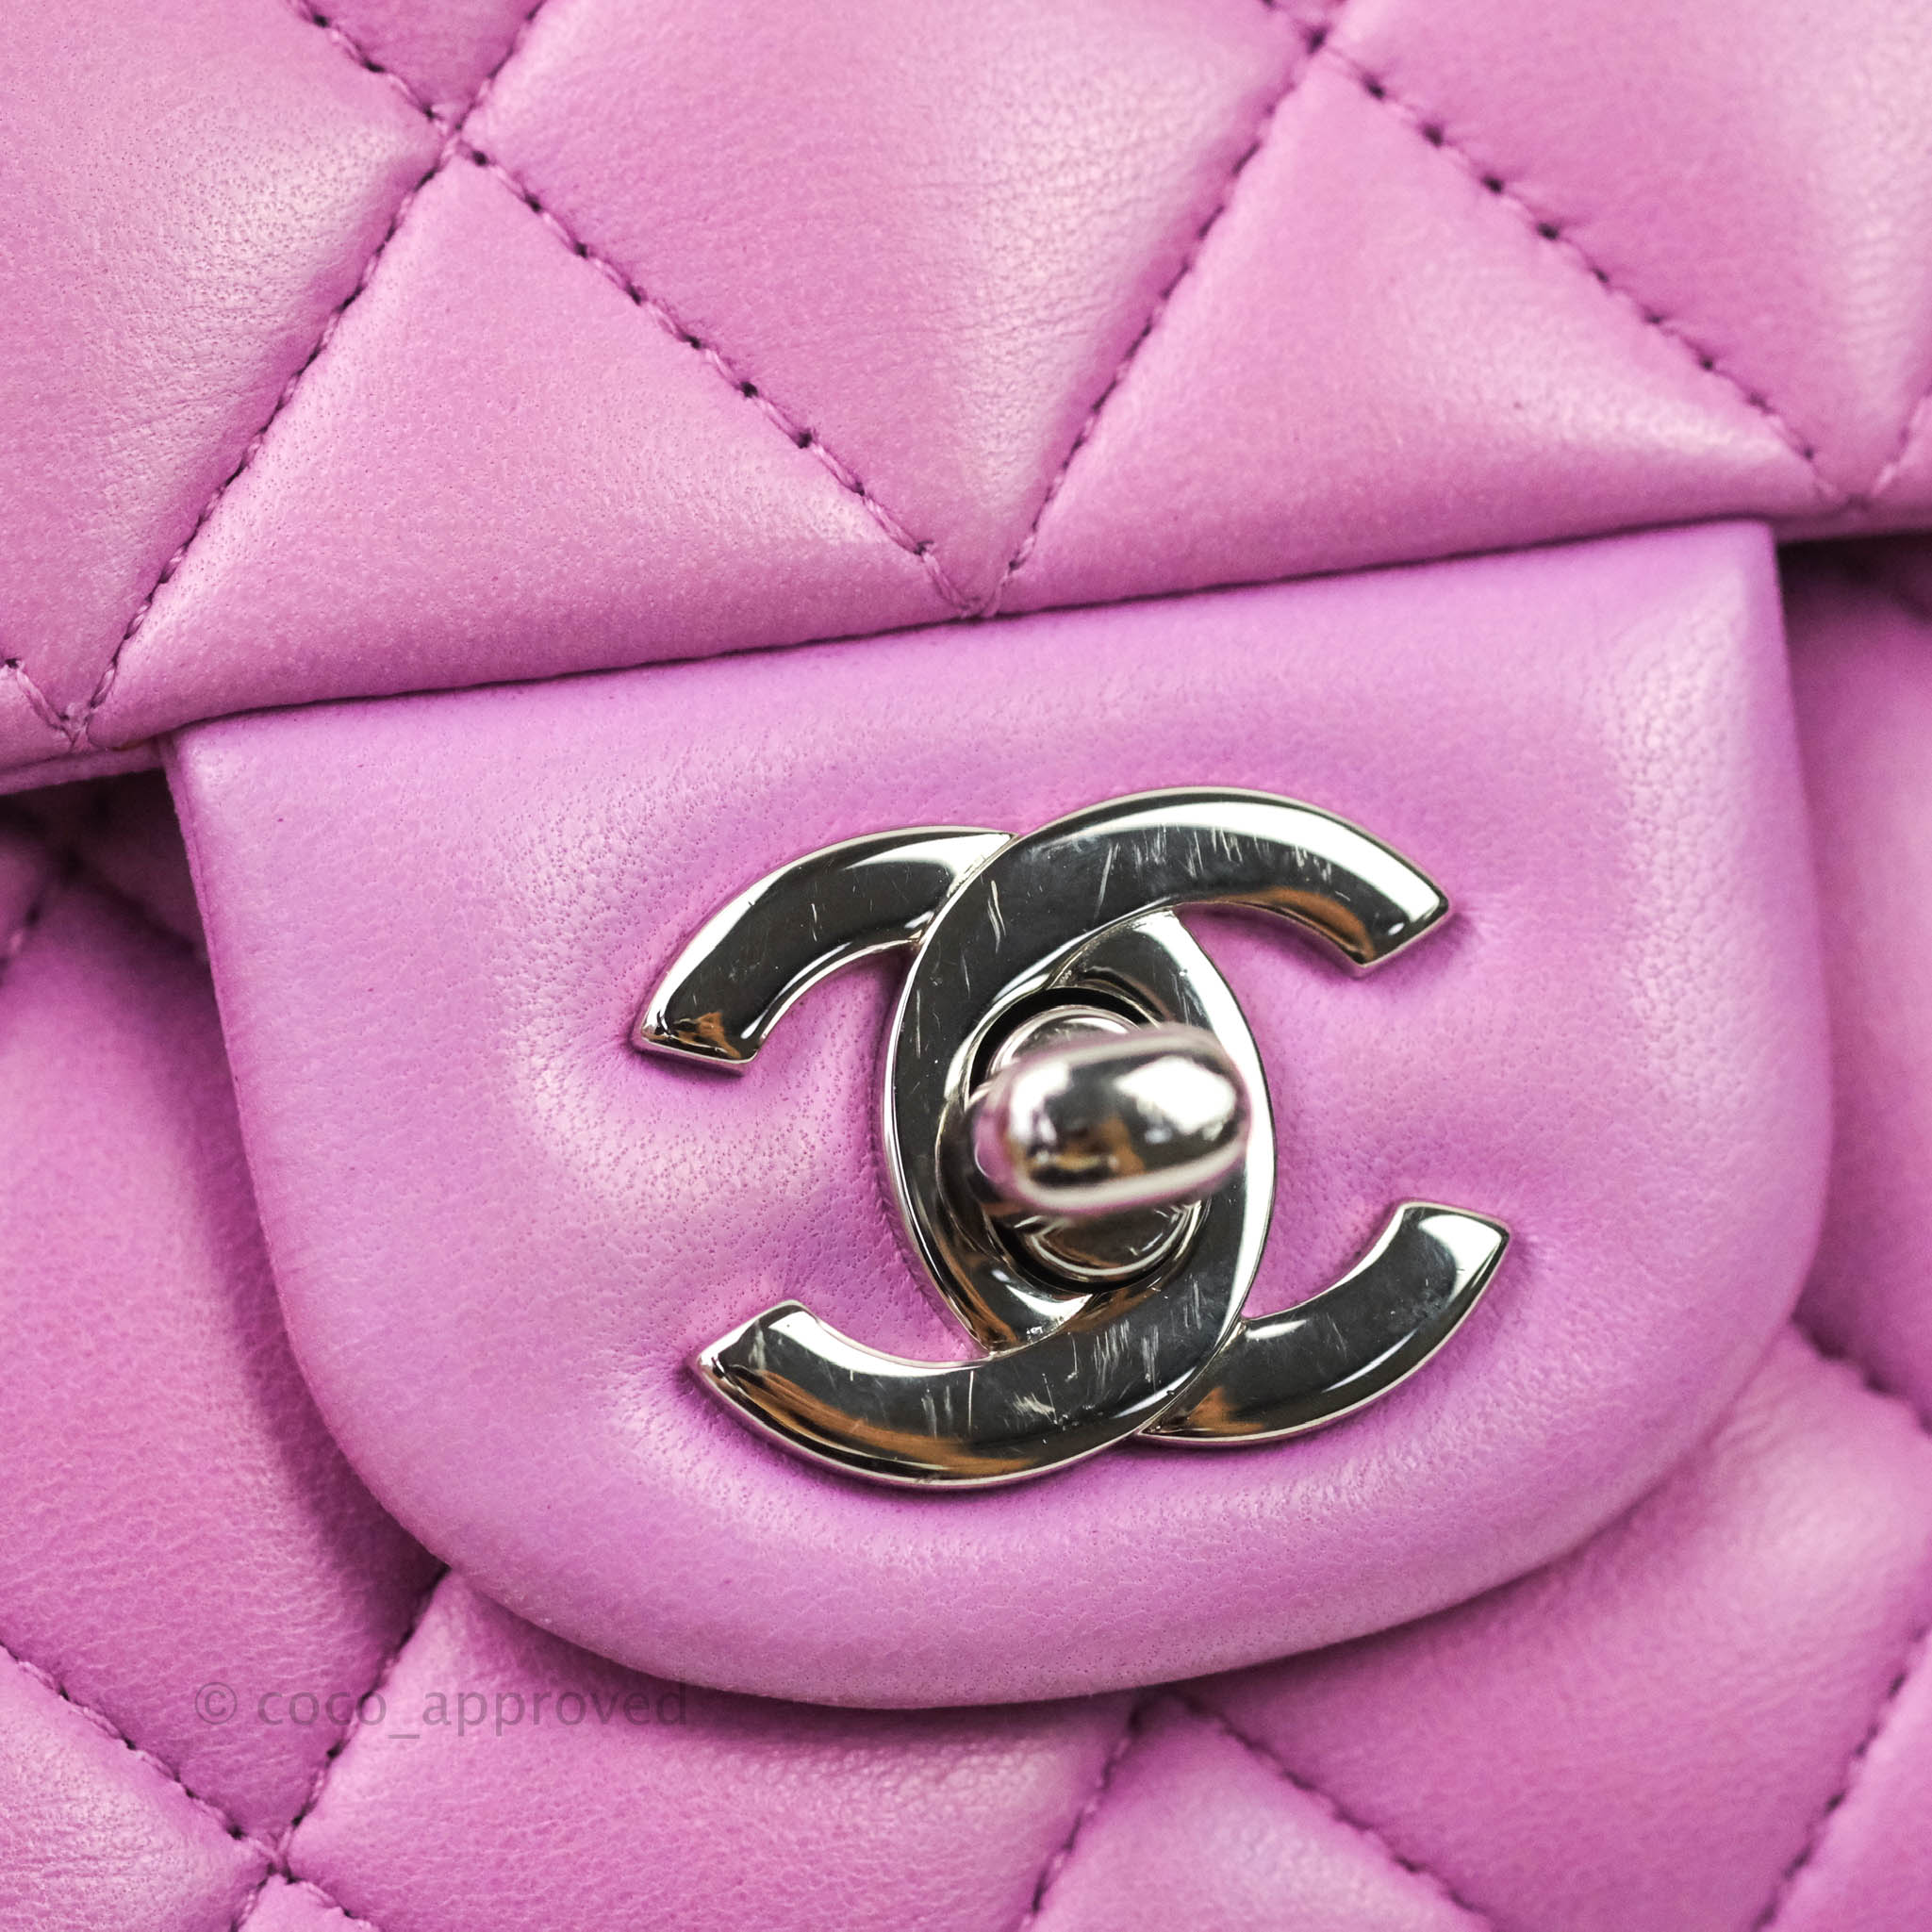 Chanel Metallic Purple Classic Flap Bag ○ Labellov ○ Buy and